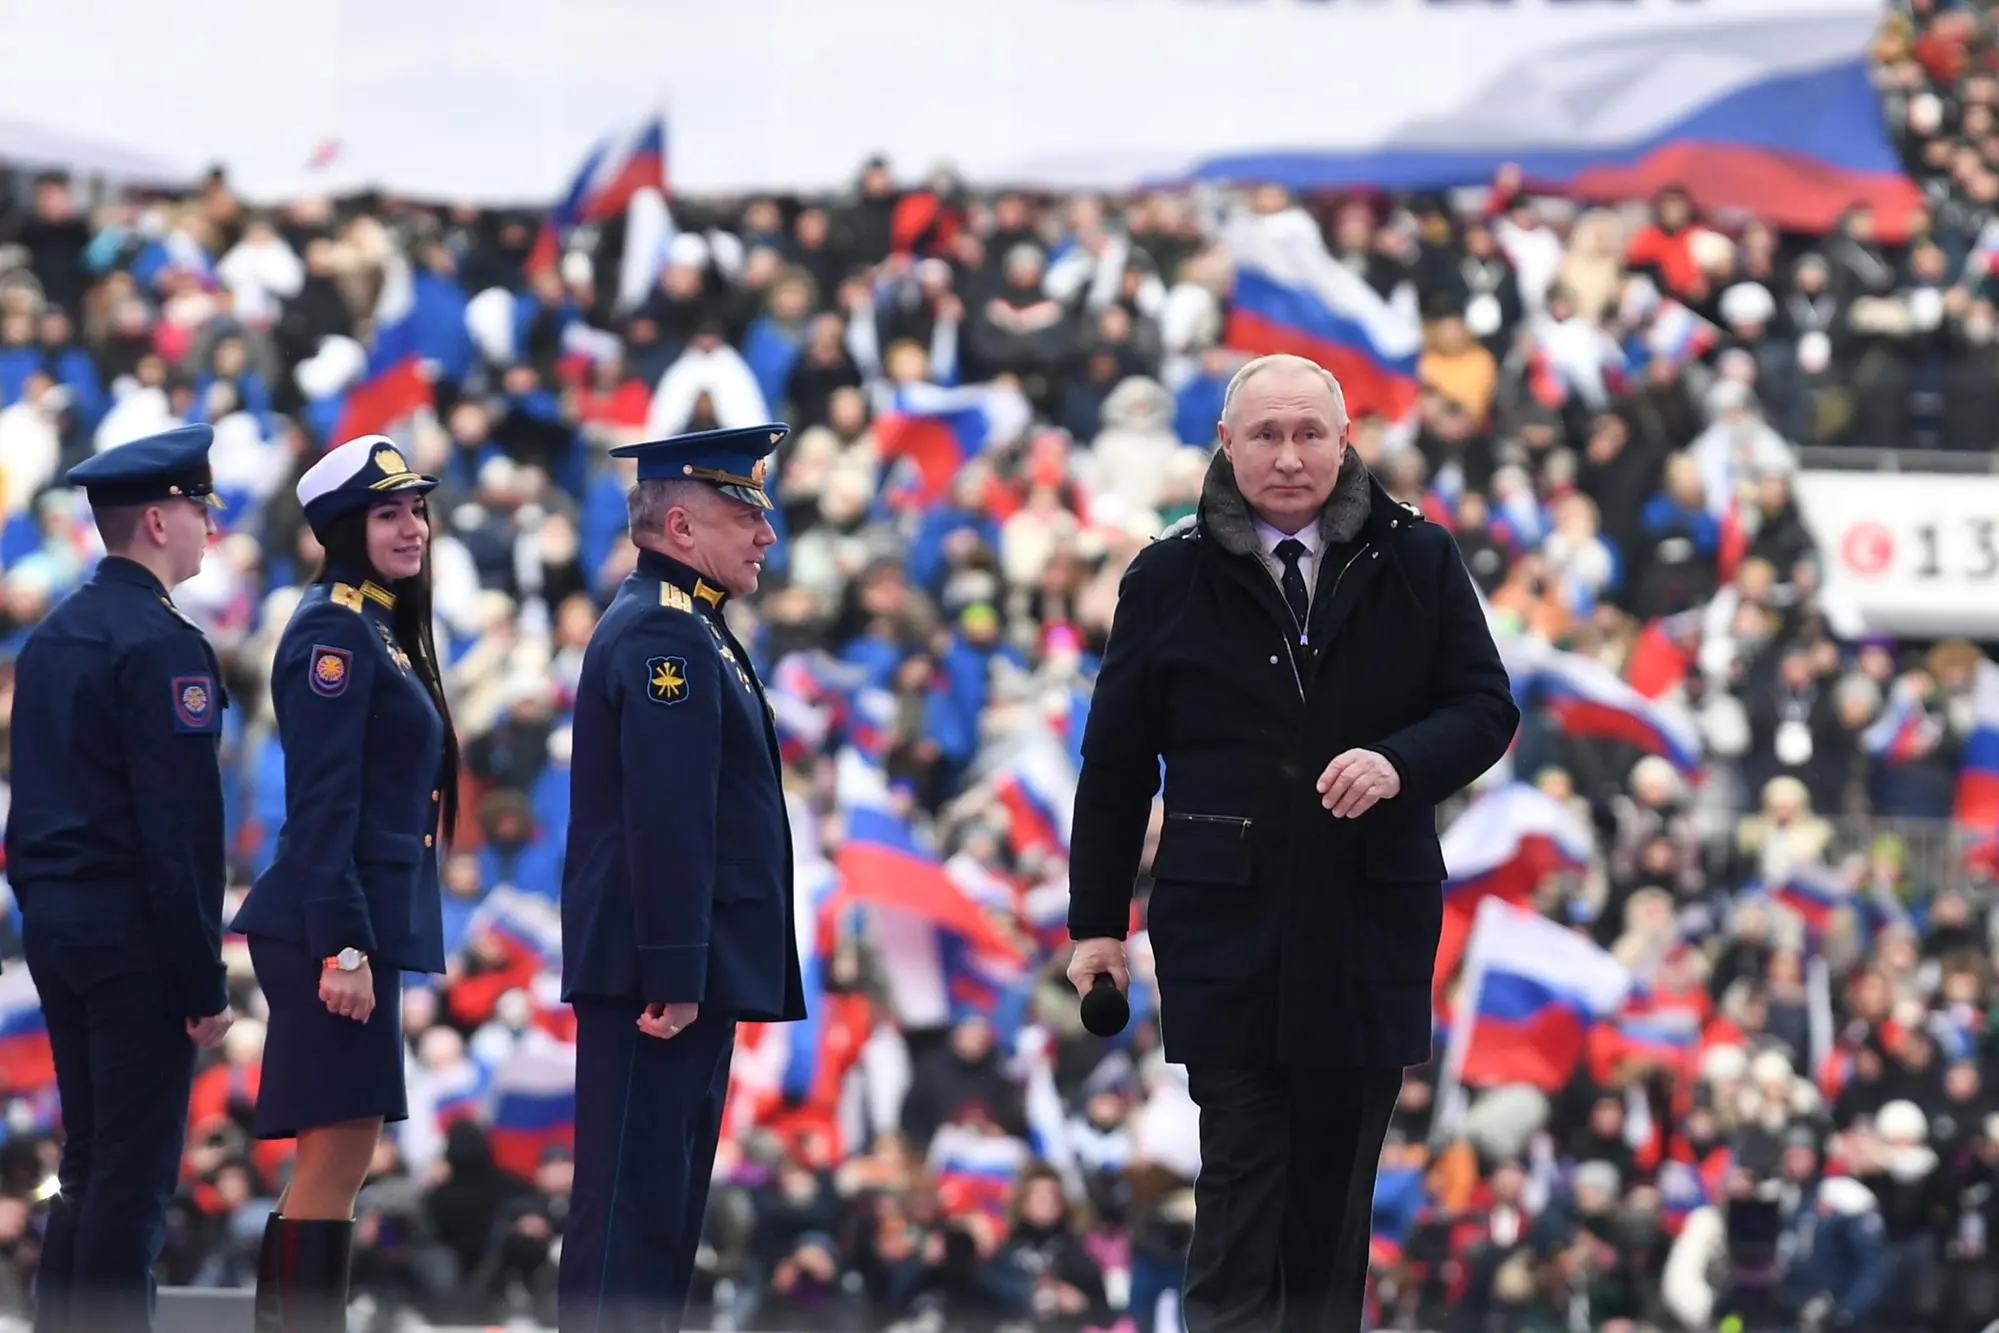 Vladimir Putin allo stadio di Mosca (Ansa)